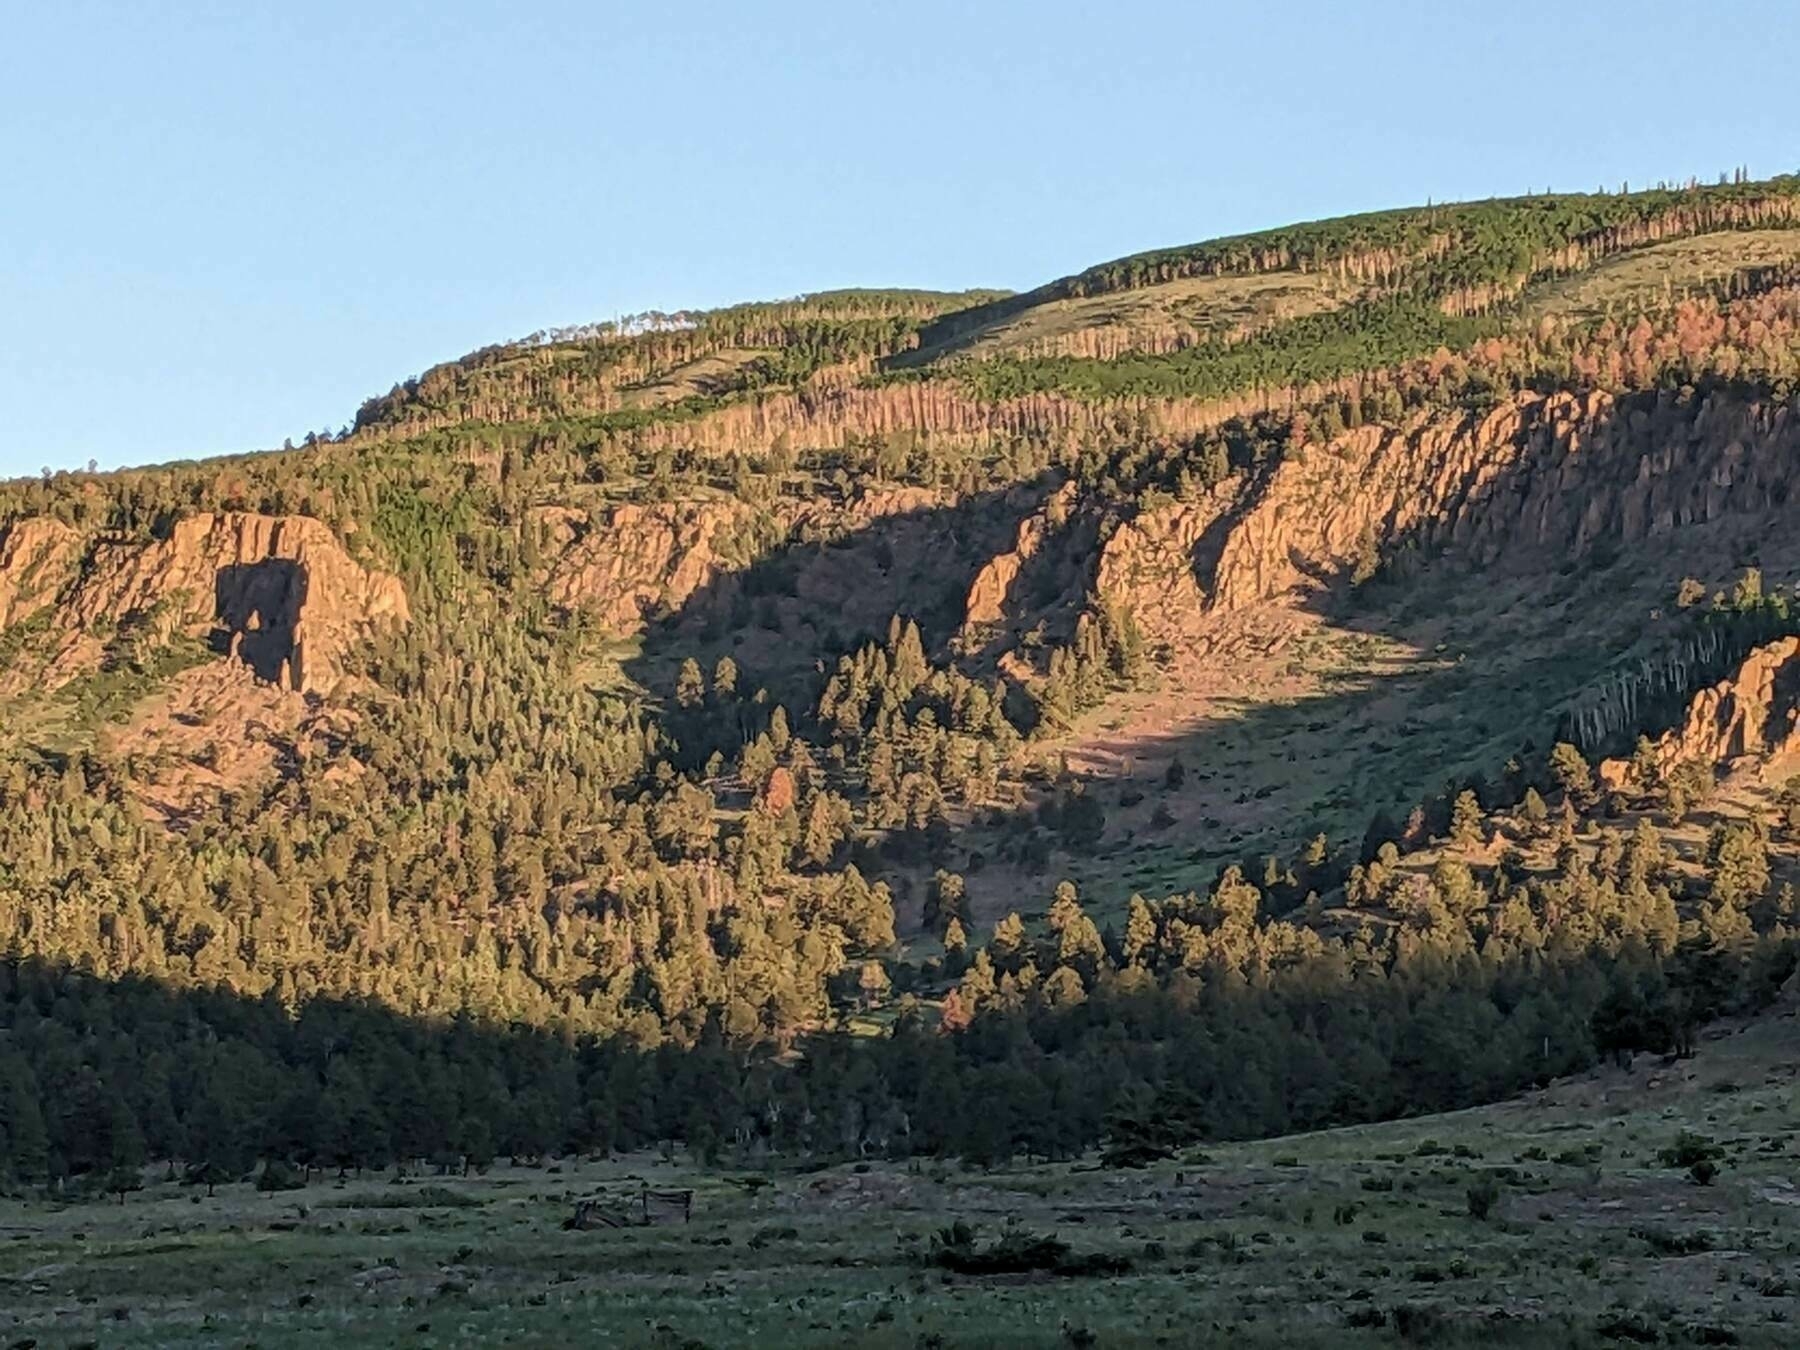 Craggy cliffs at sunrise.